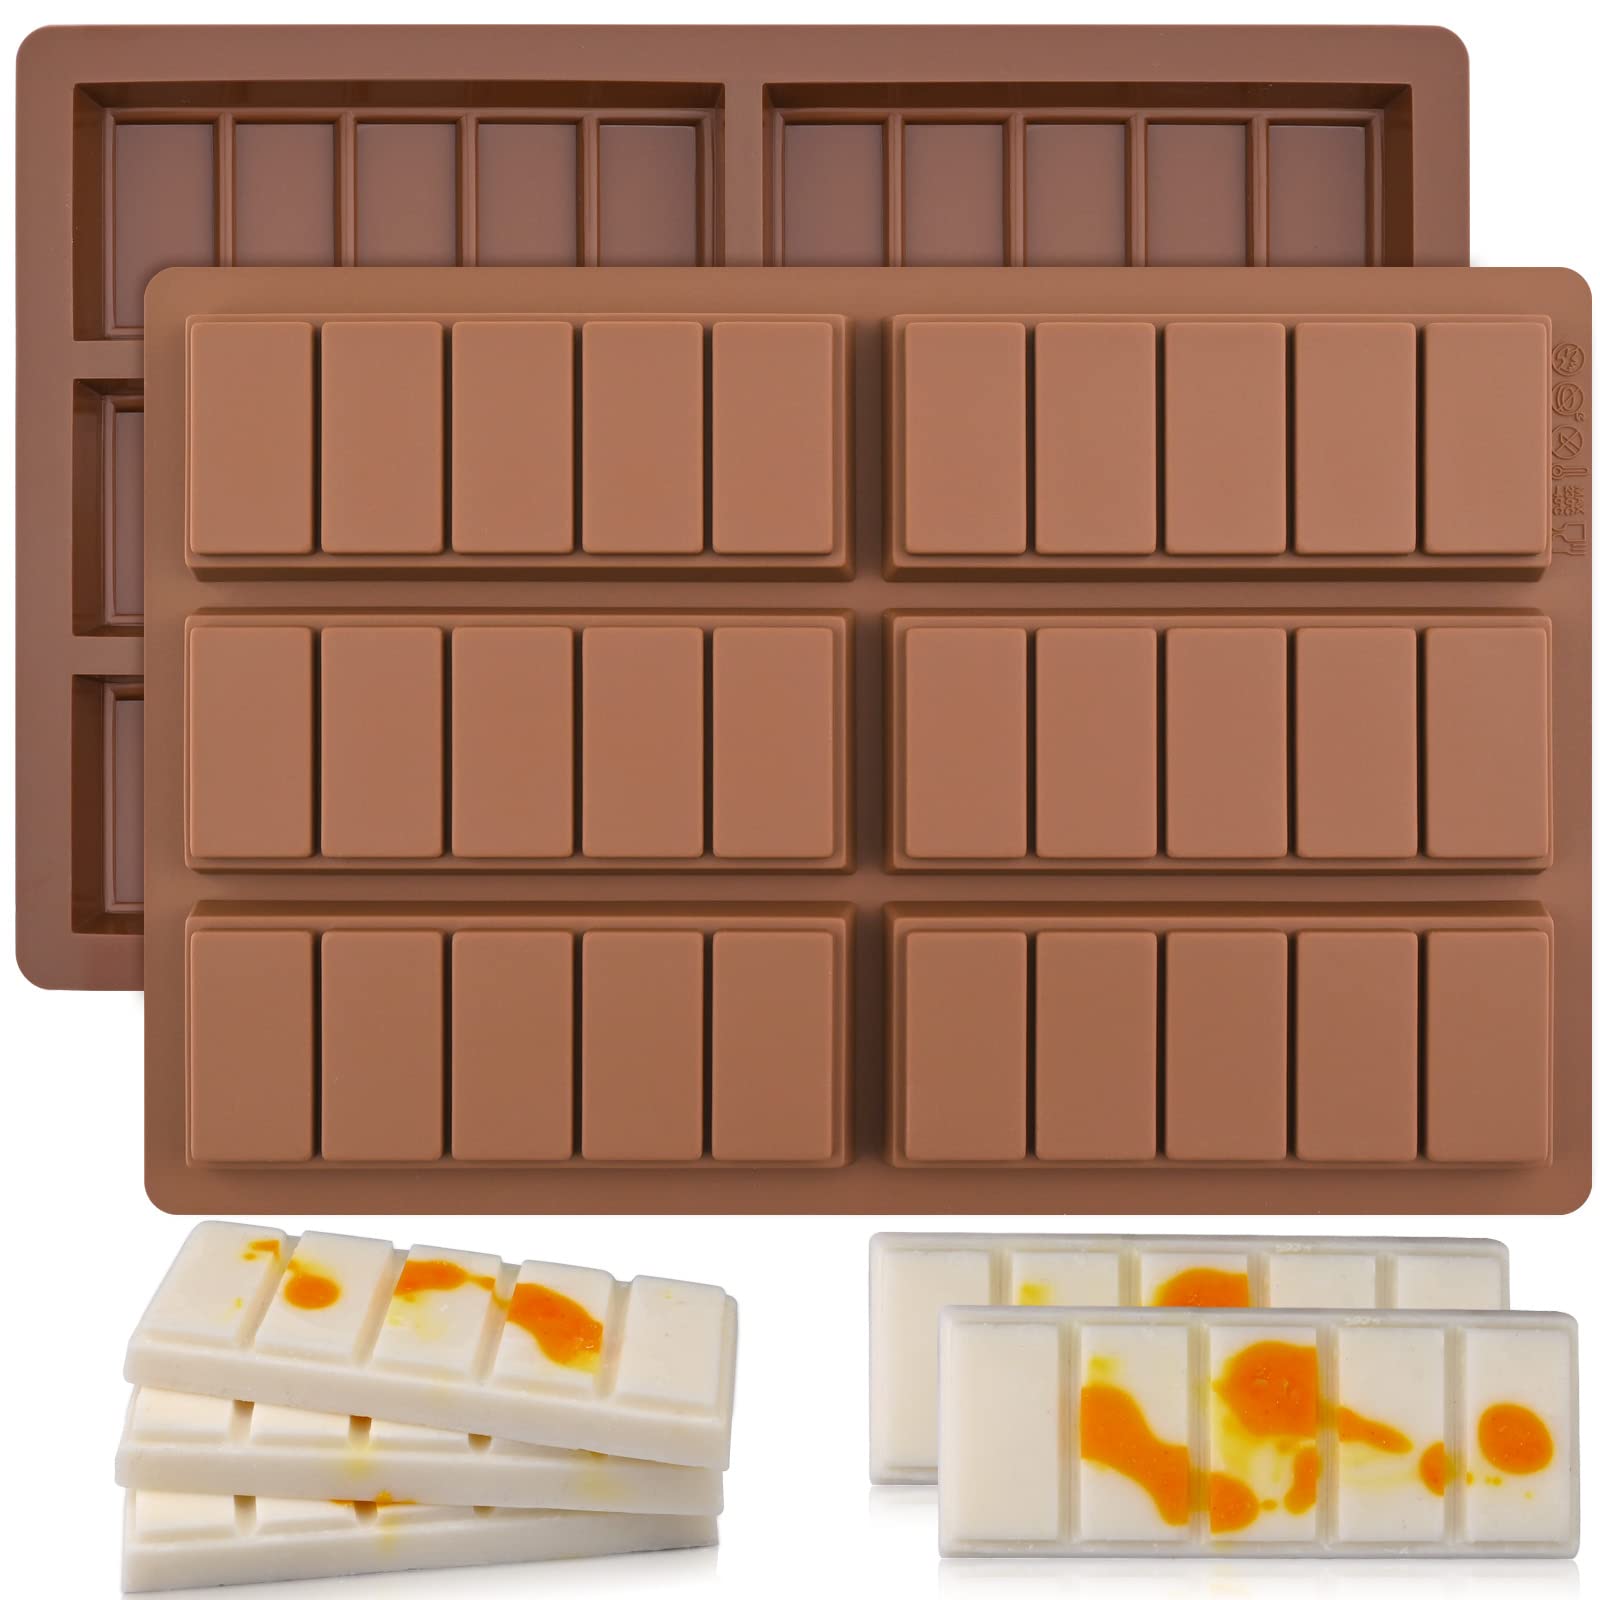 Emoji Chocolate Molds. KITCHENATICS Nonstick BPA-free Small